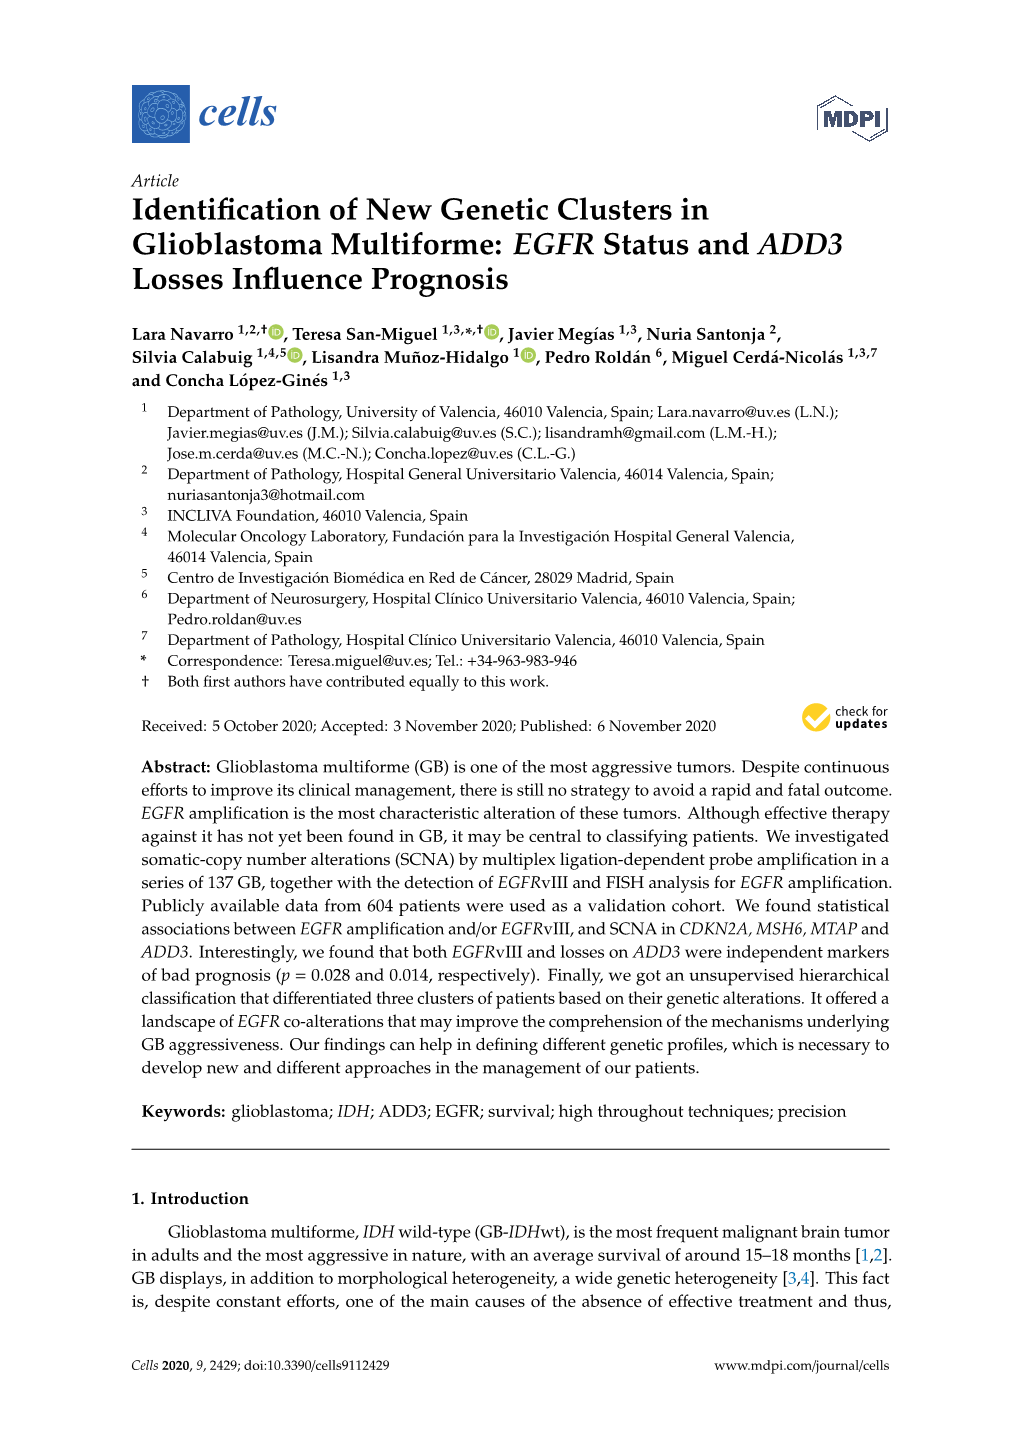 Identification of New Genetic Clusters in Glioblastoma Multiforme: EGFR